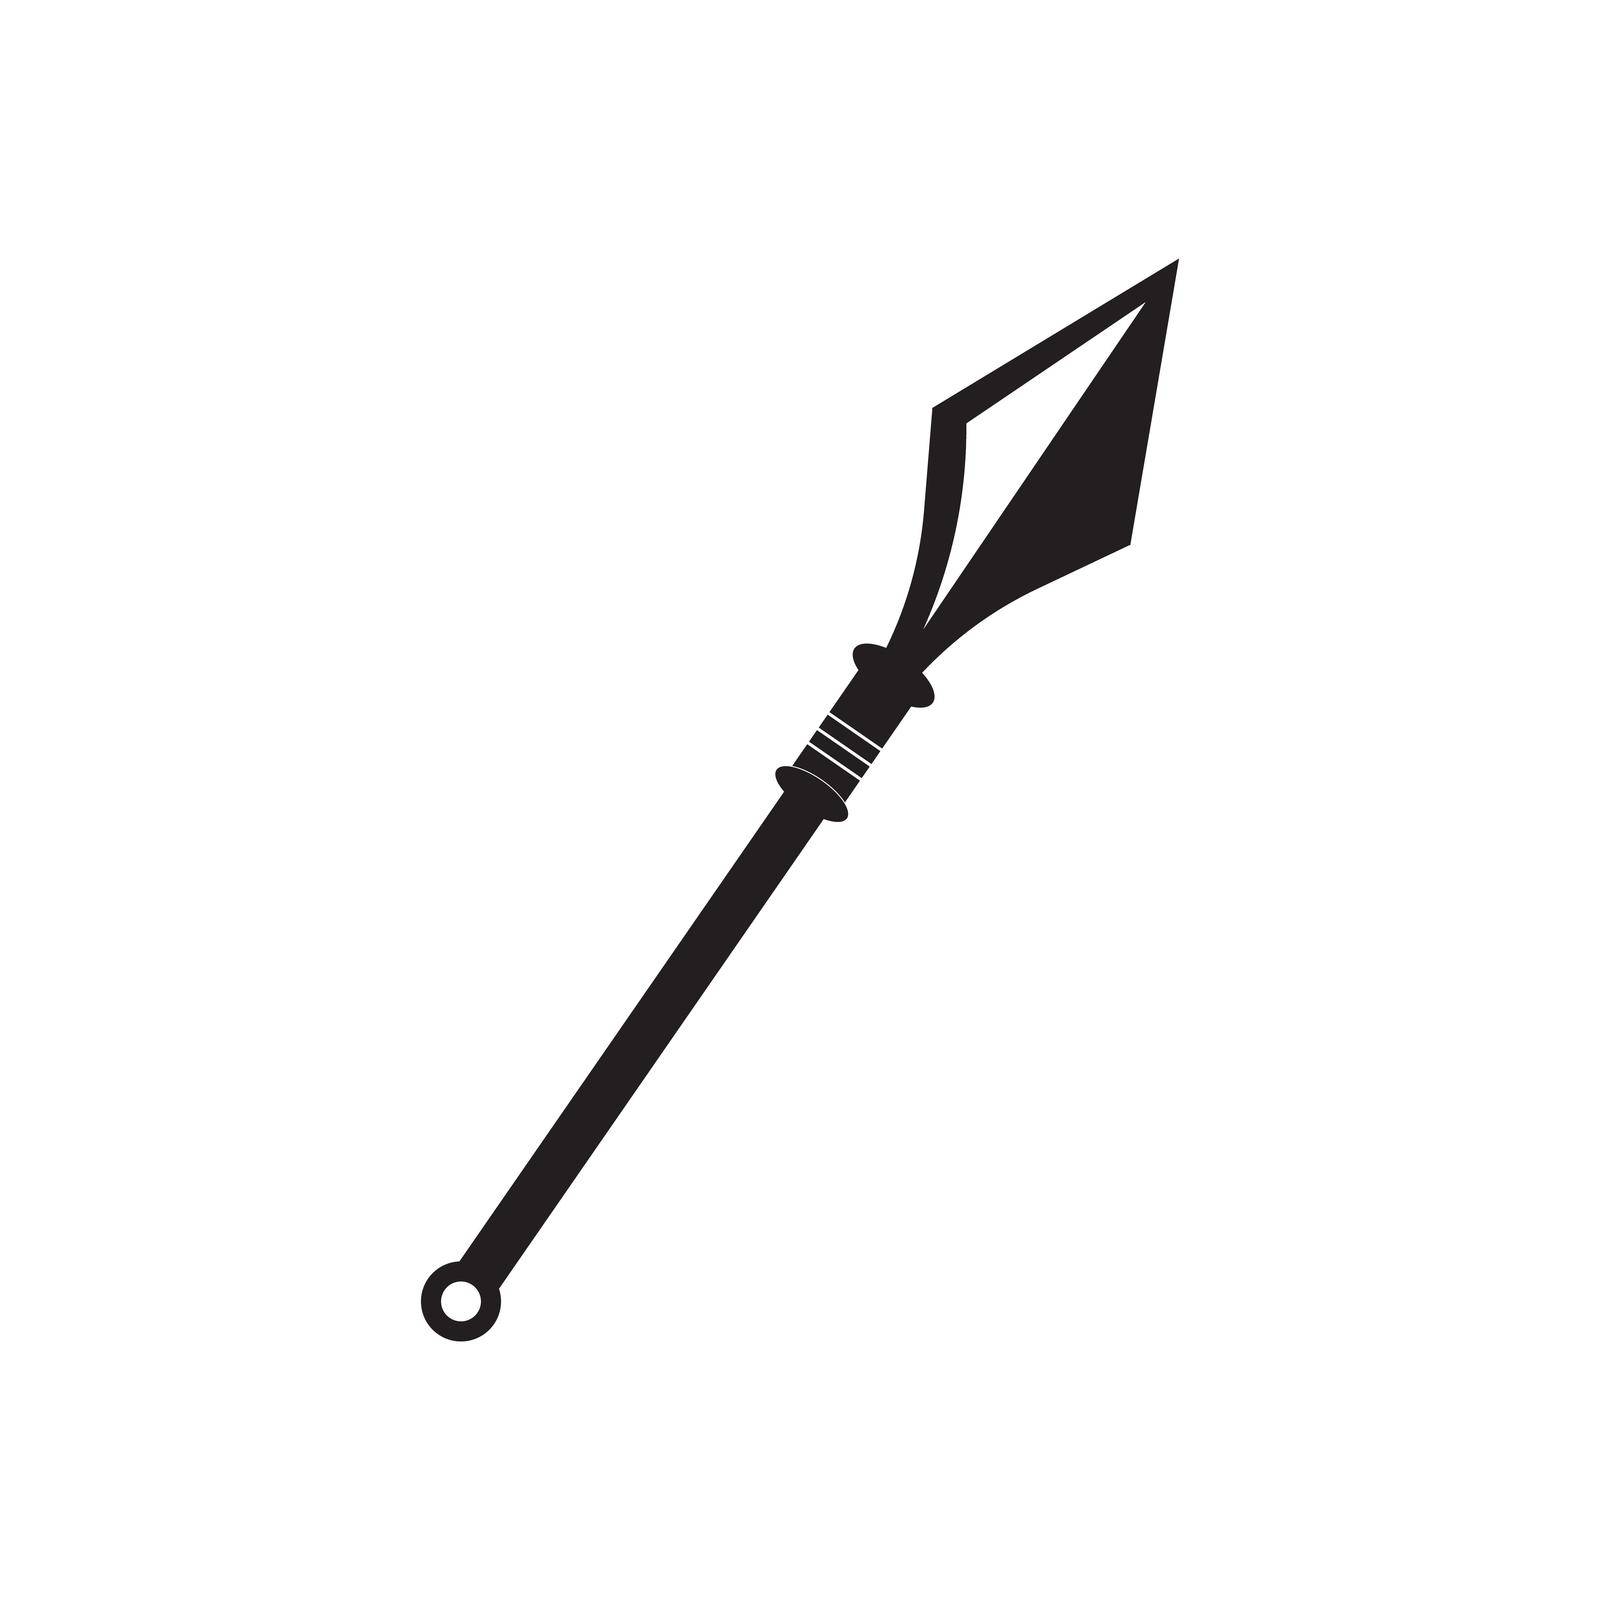 Spear icon logo free vector design
